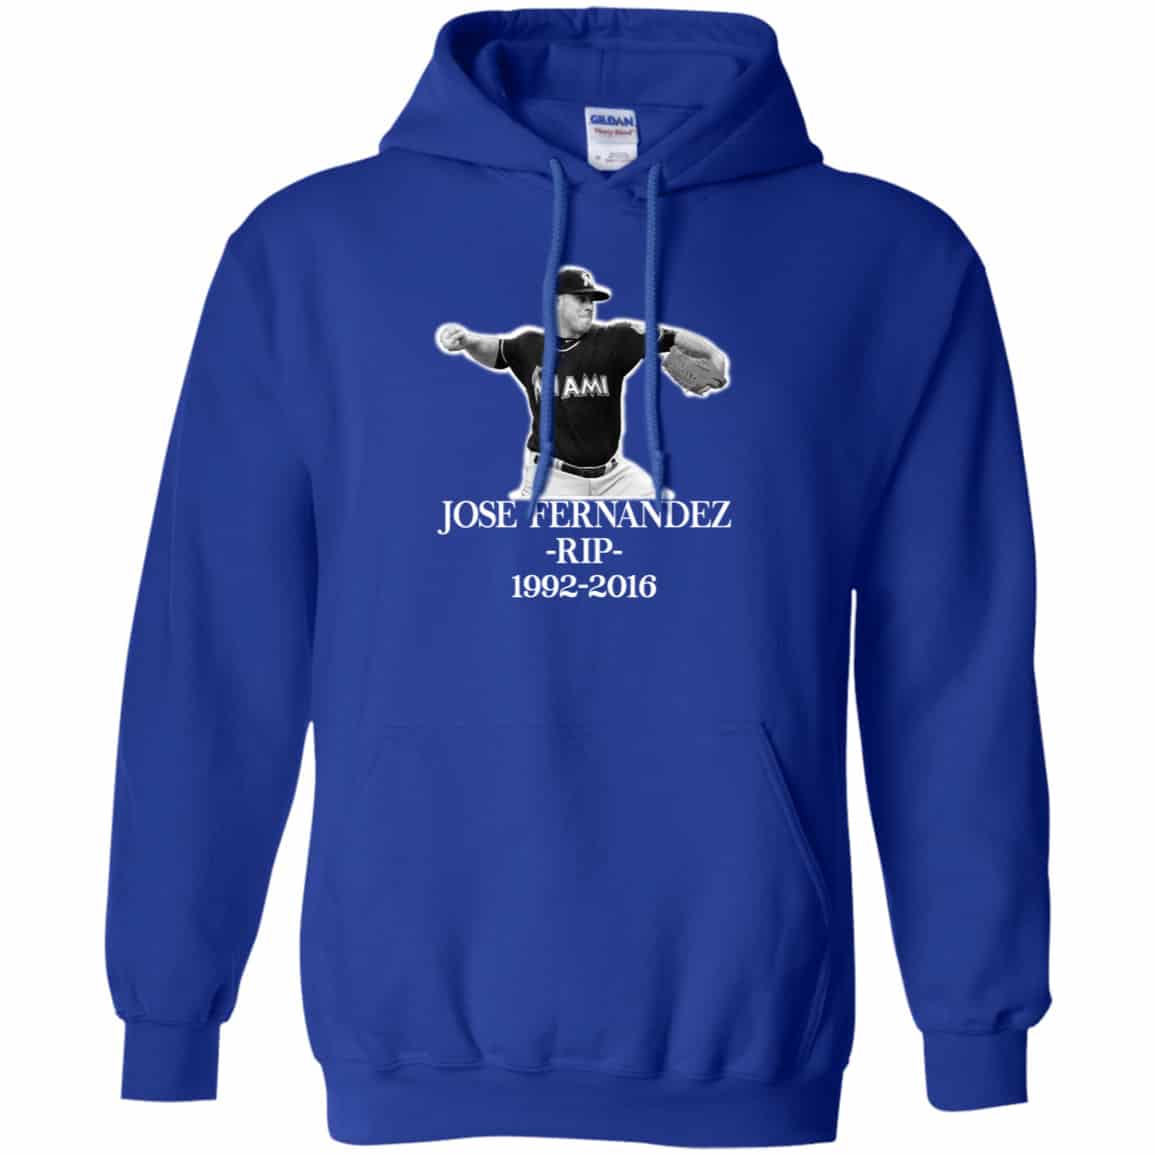 Rip Jose Fernandez 2016 - José Fernández T-shirt, Hoodies, Tank